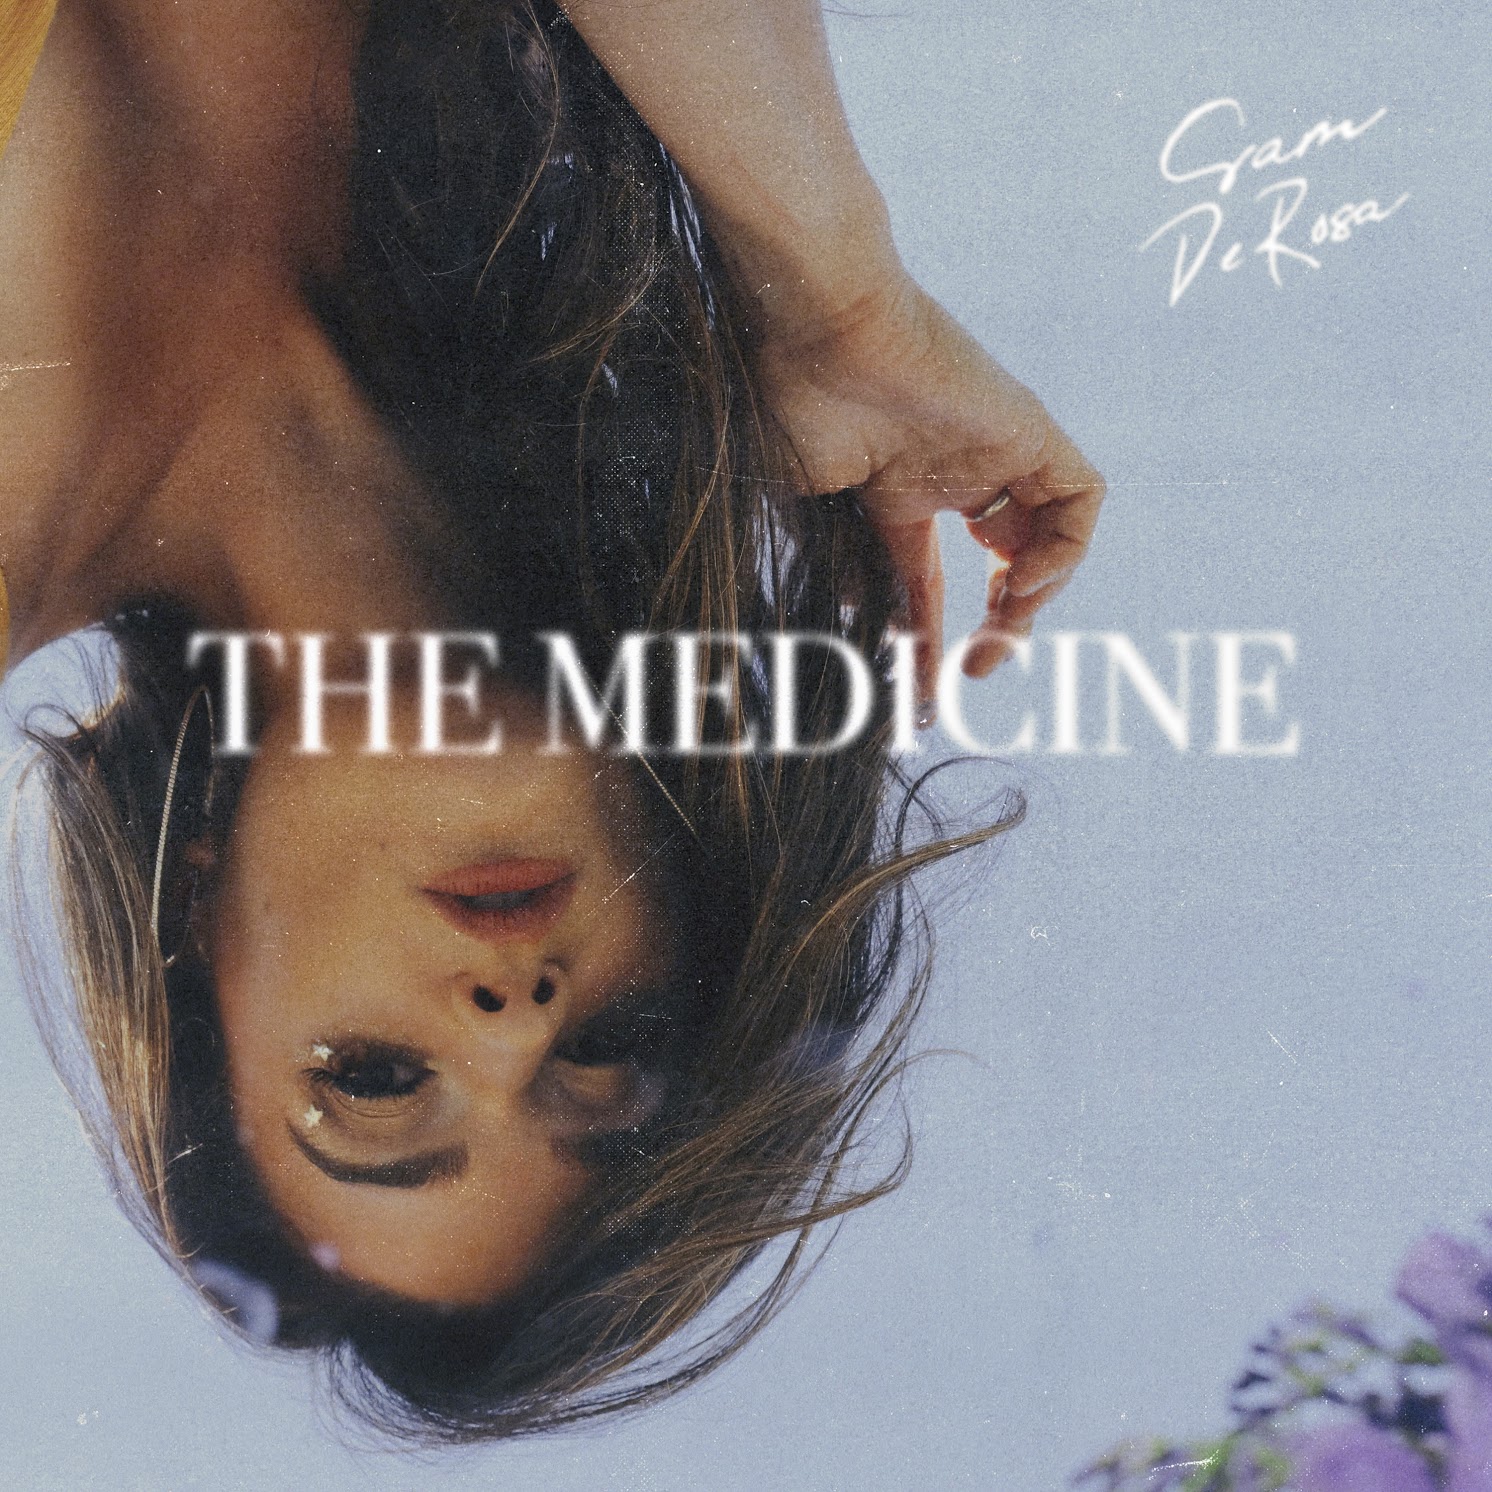 Sam DeRosa - "The Medicine" EP artwork